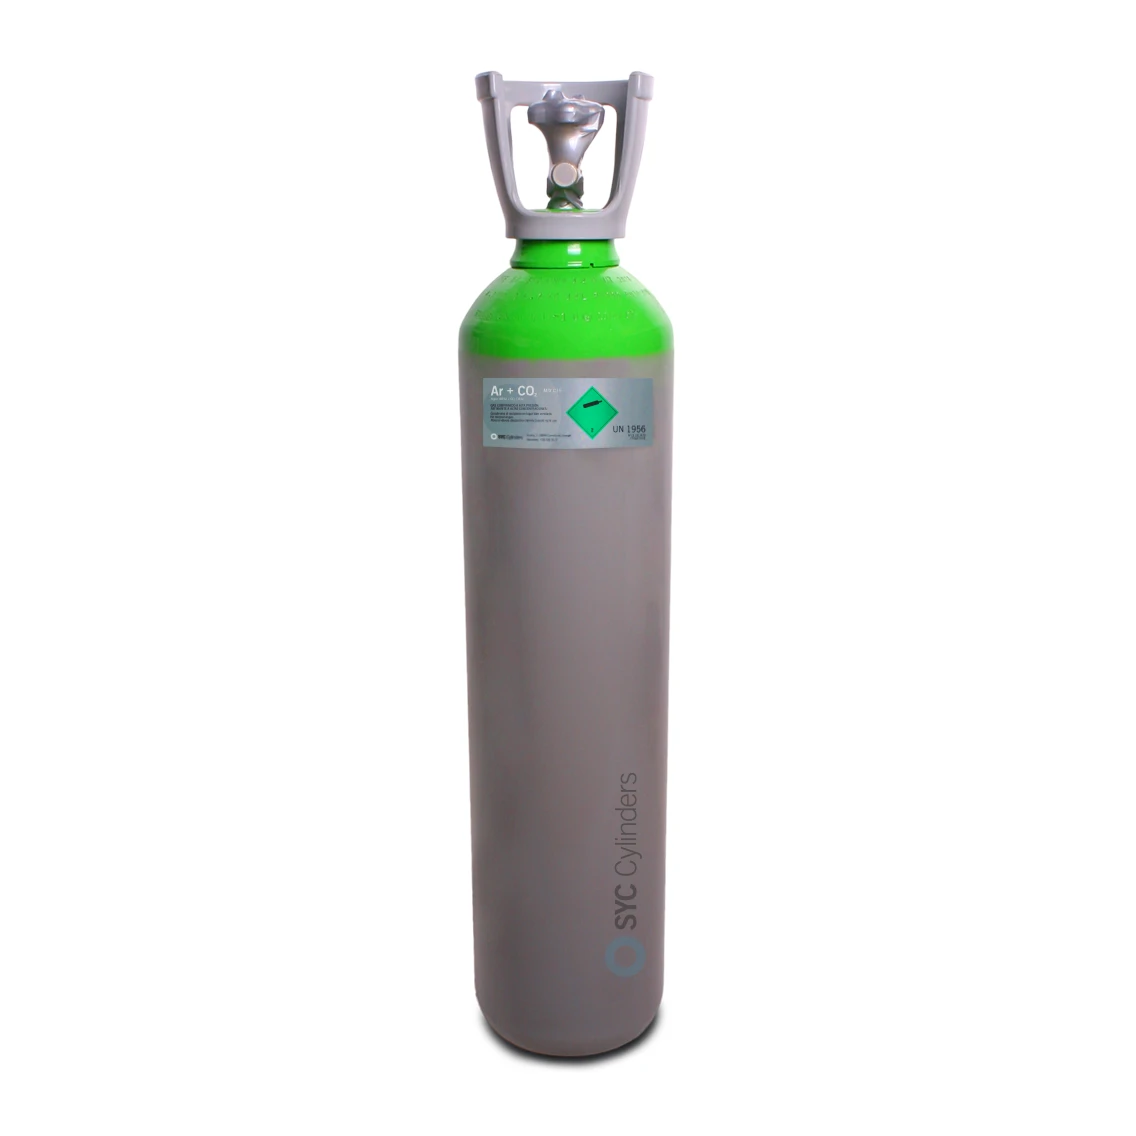 Botella Butano Cargada 2,8kg 907 (camping gas)